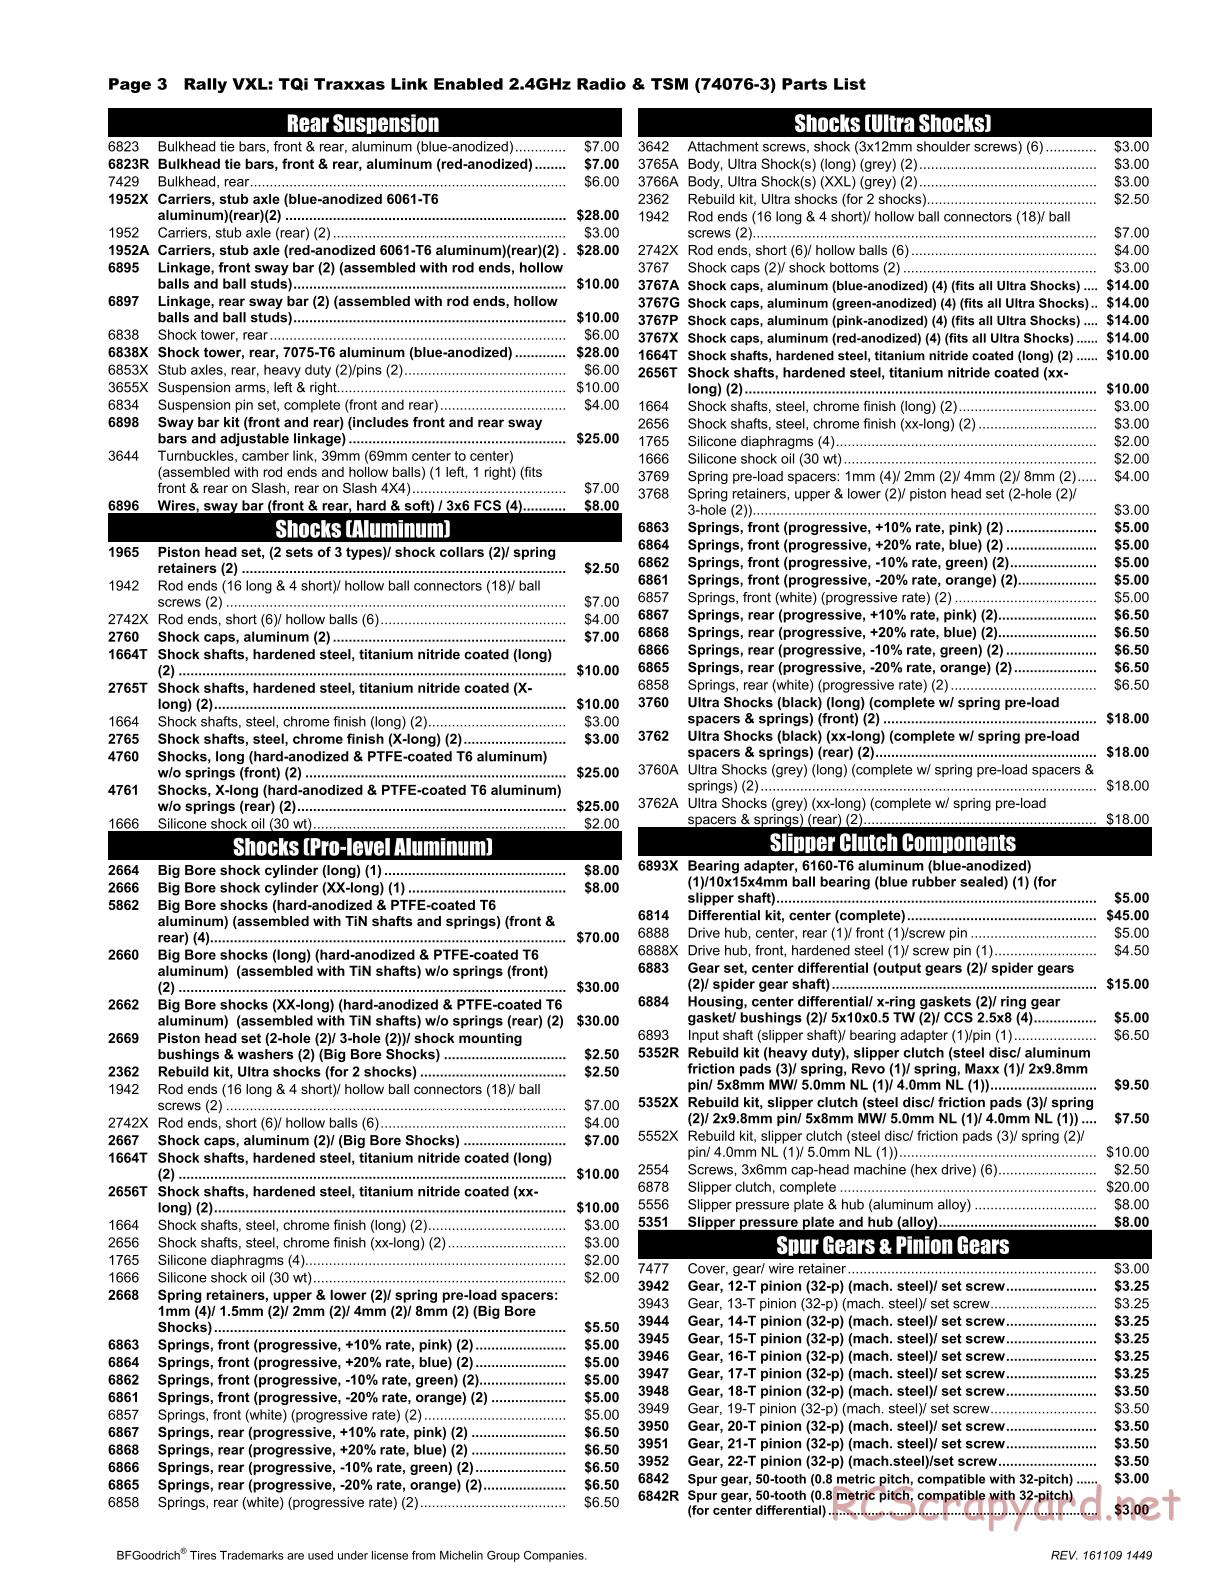 Traxxas - Rally TSM (2016) - Parts List - Page 3